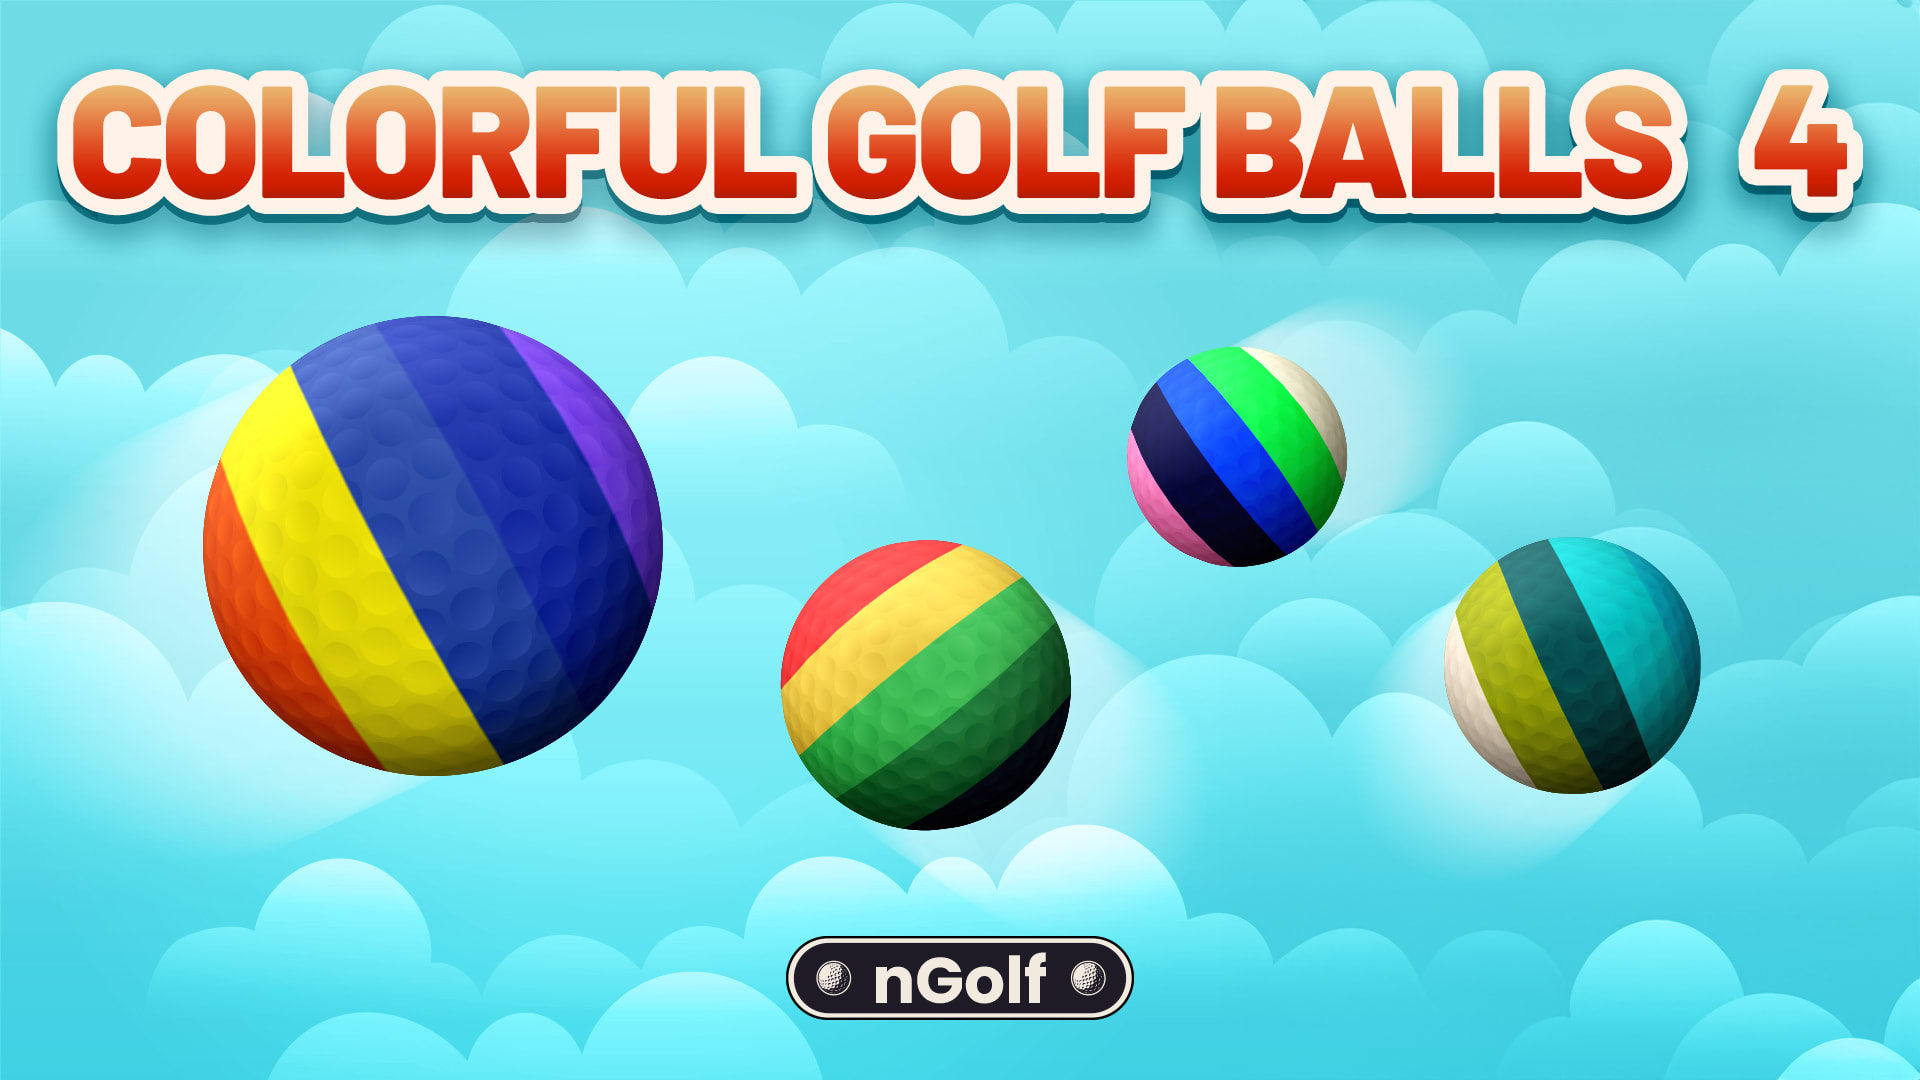 Colorful Golf Balls 4